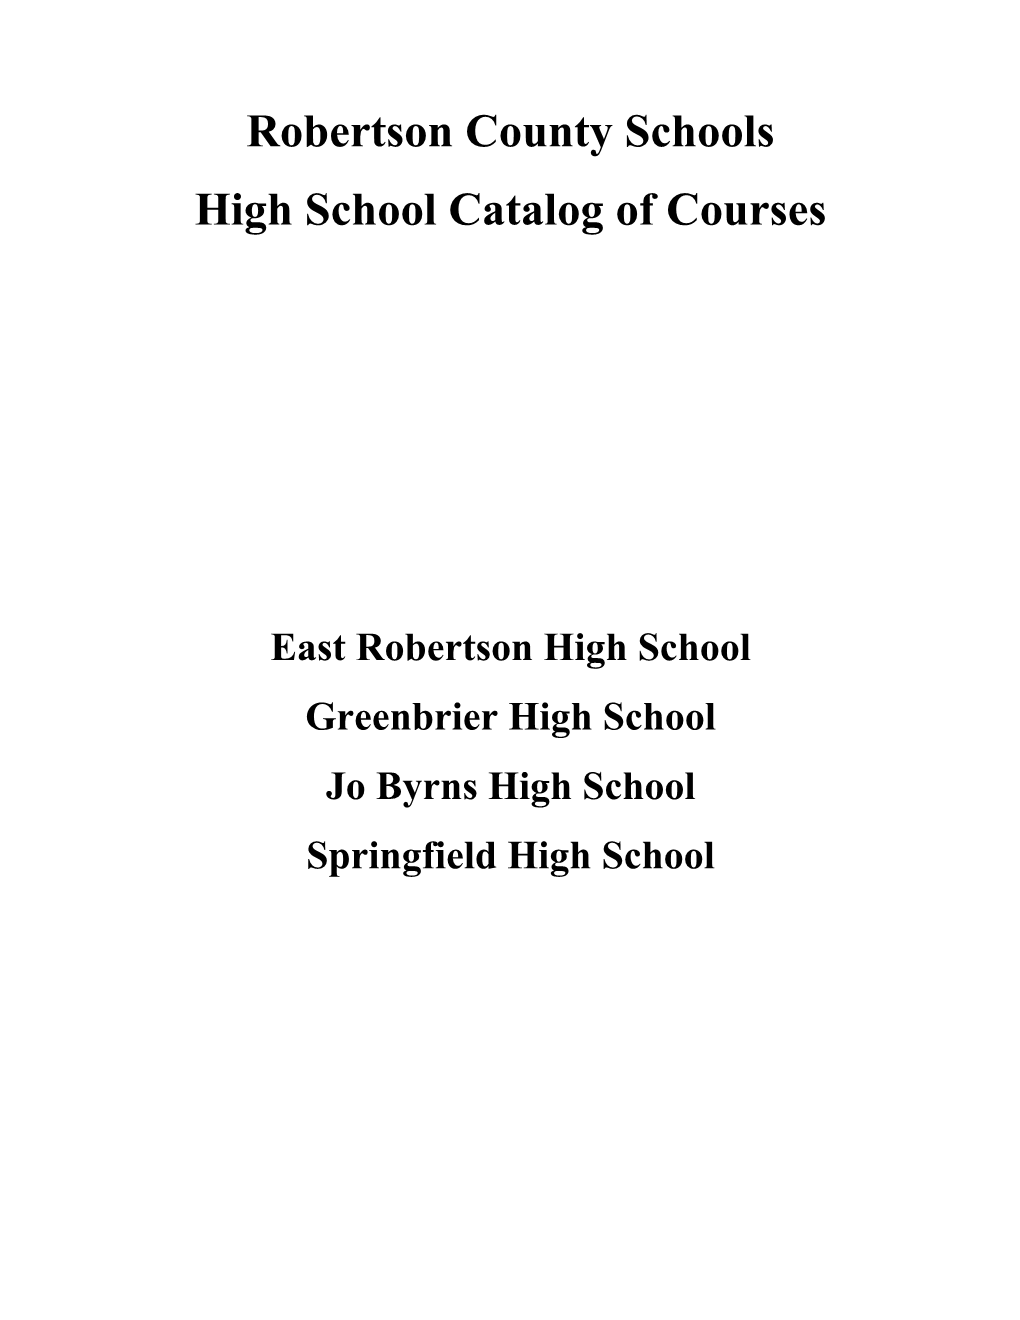 High School Catalog of Courses